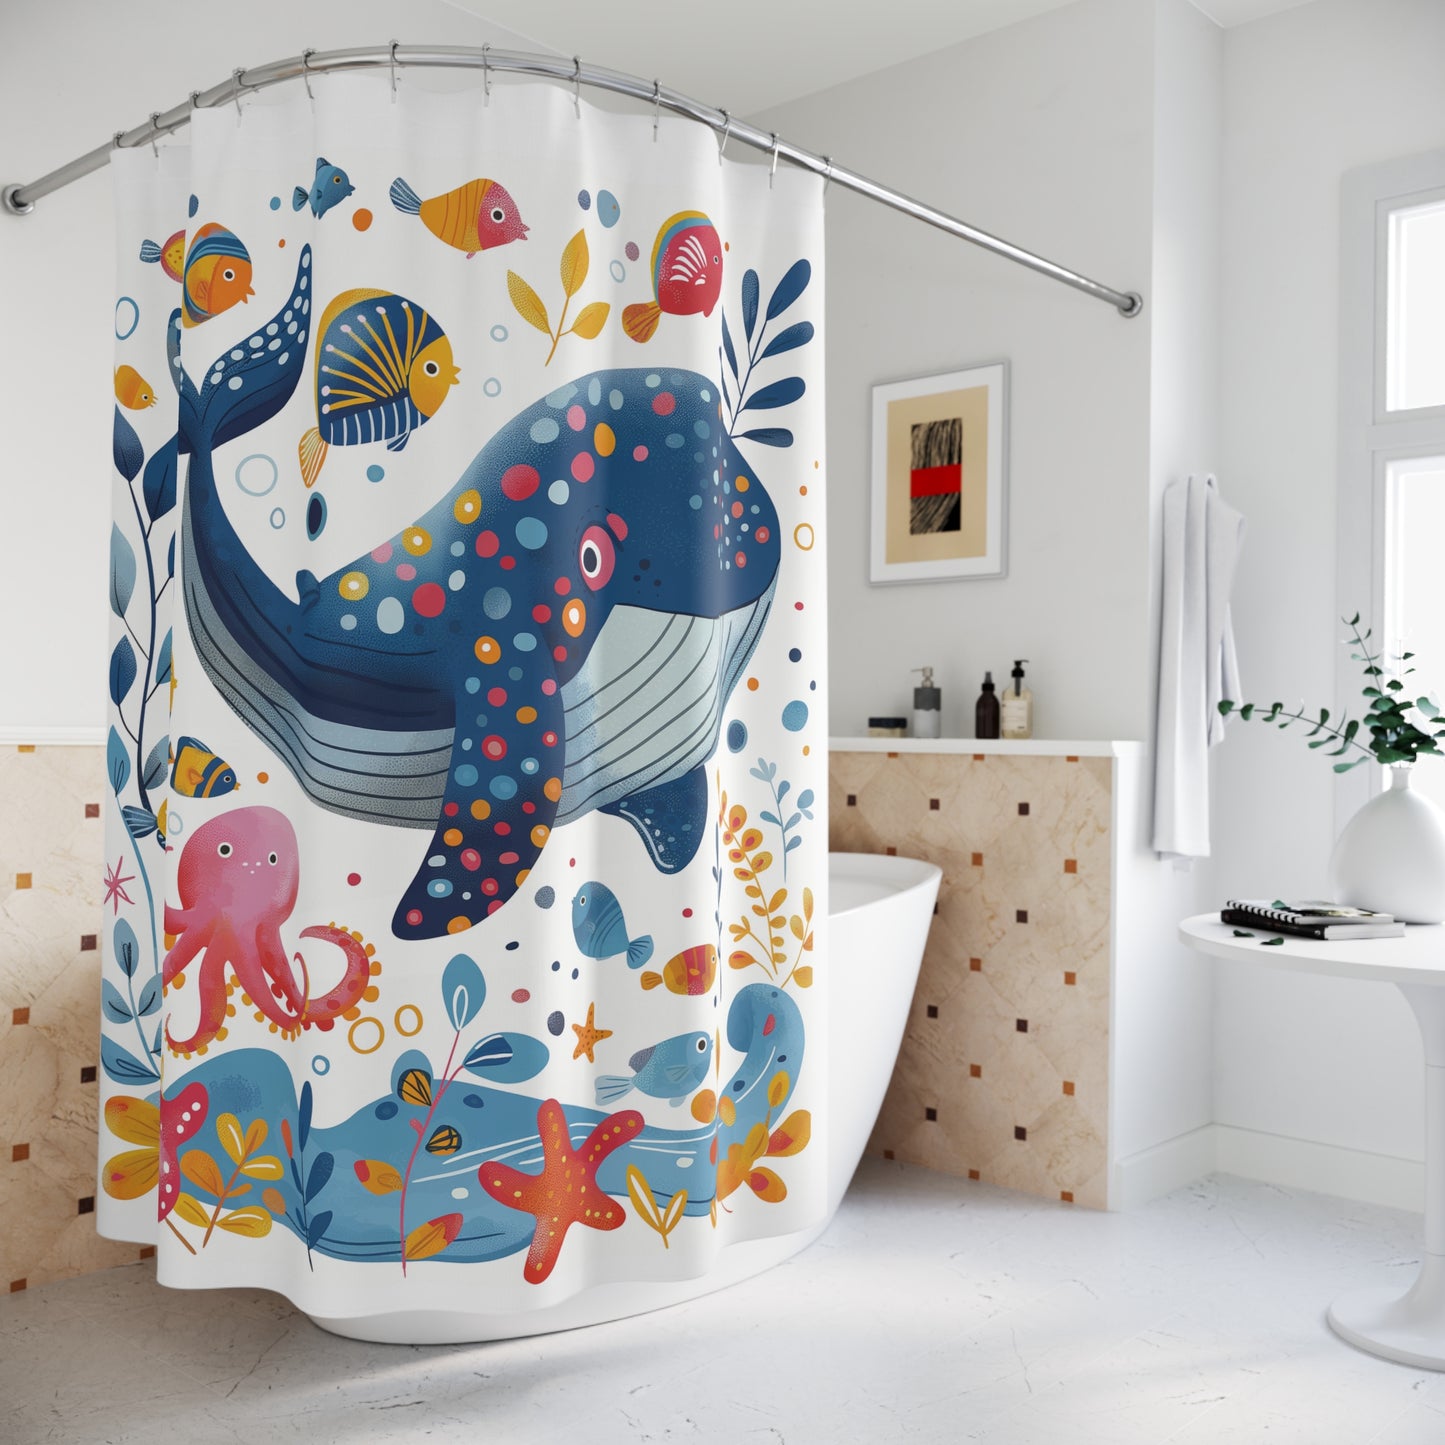 Whimsical Underwater Shower Curtain